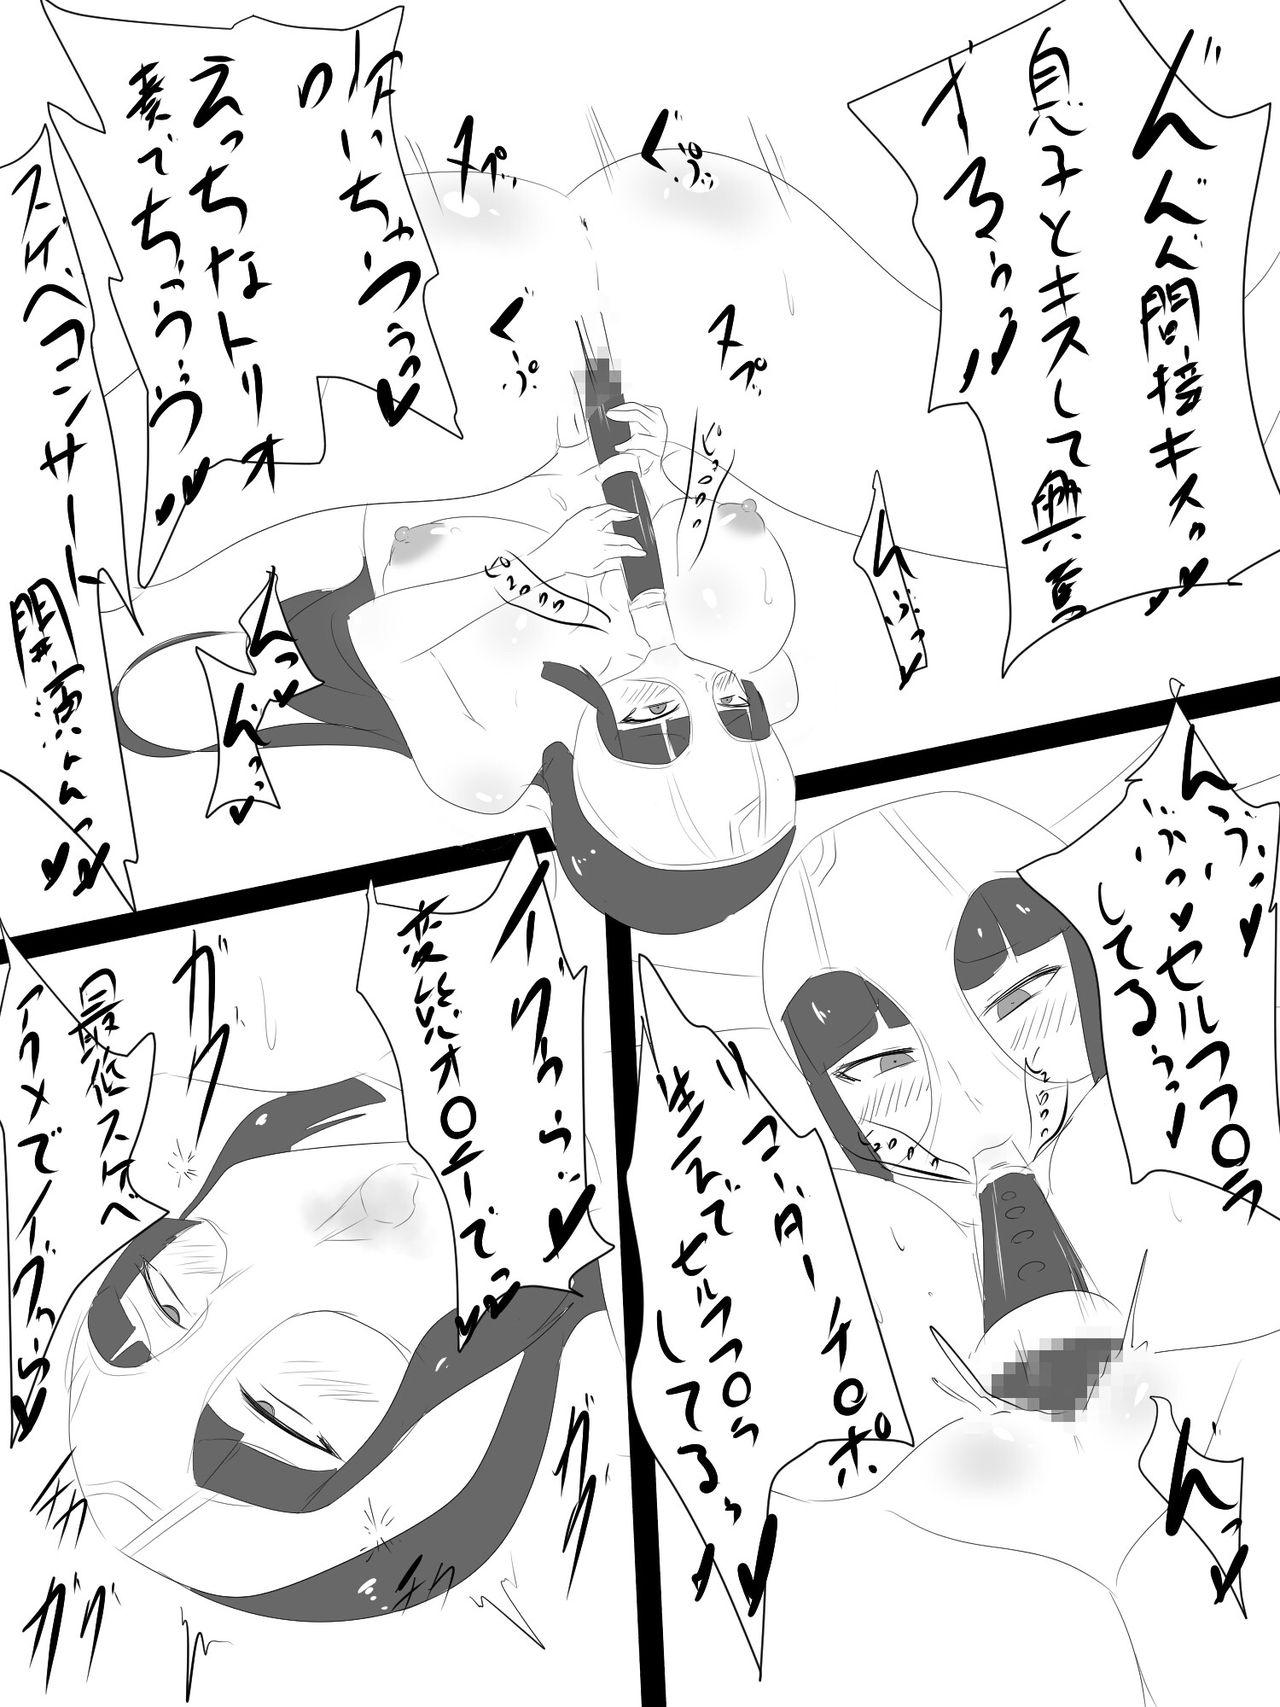 Tanned 変態ママオナニー漫画 - Original Relax - Page 3